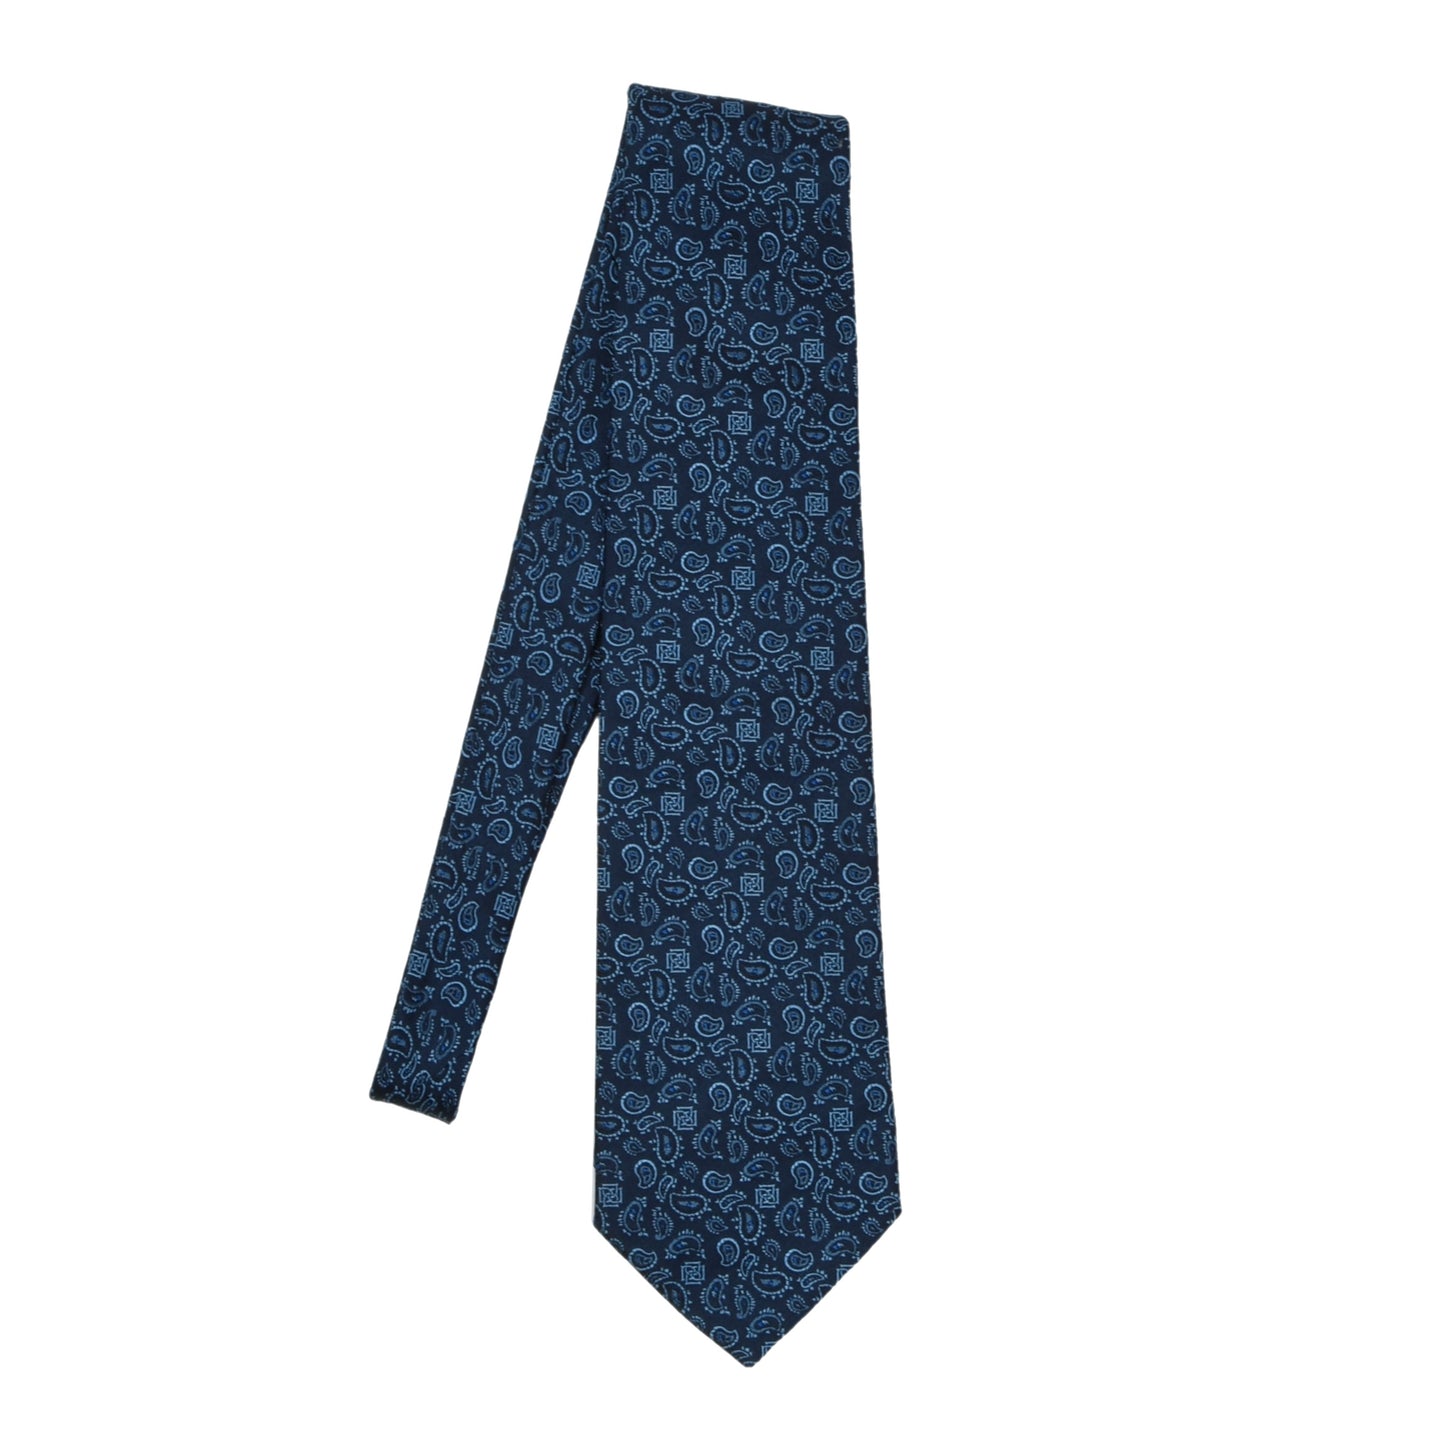 DAKS London Silk Tie ca. 143.5cm/9.5cm - Navy Blue Paisley